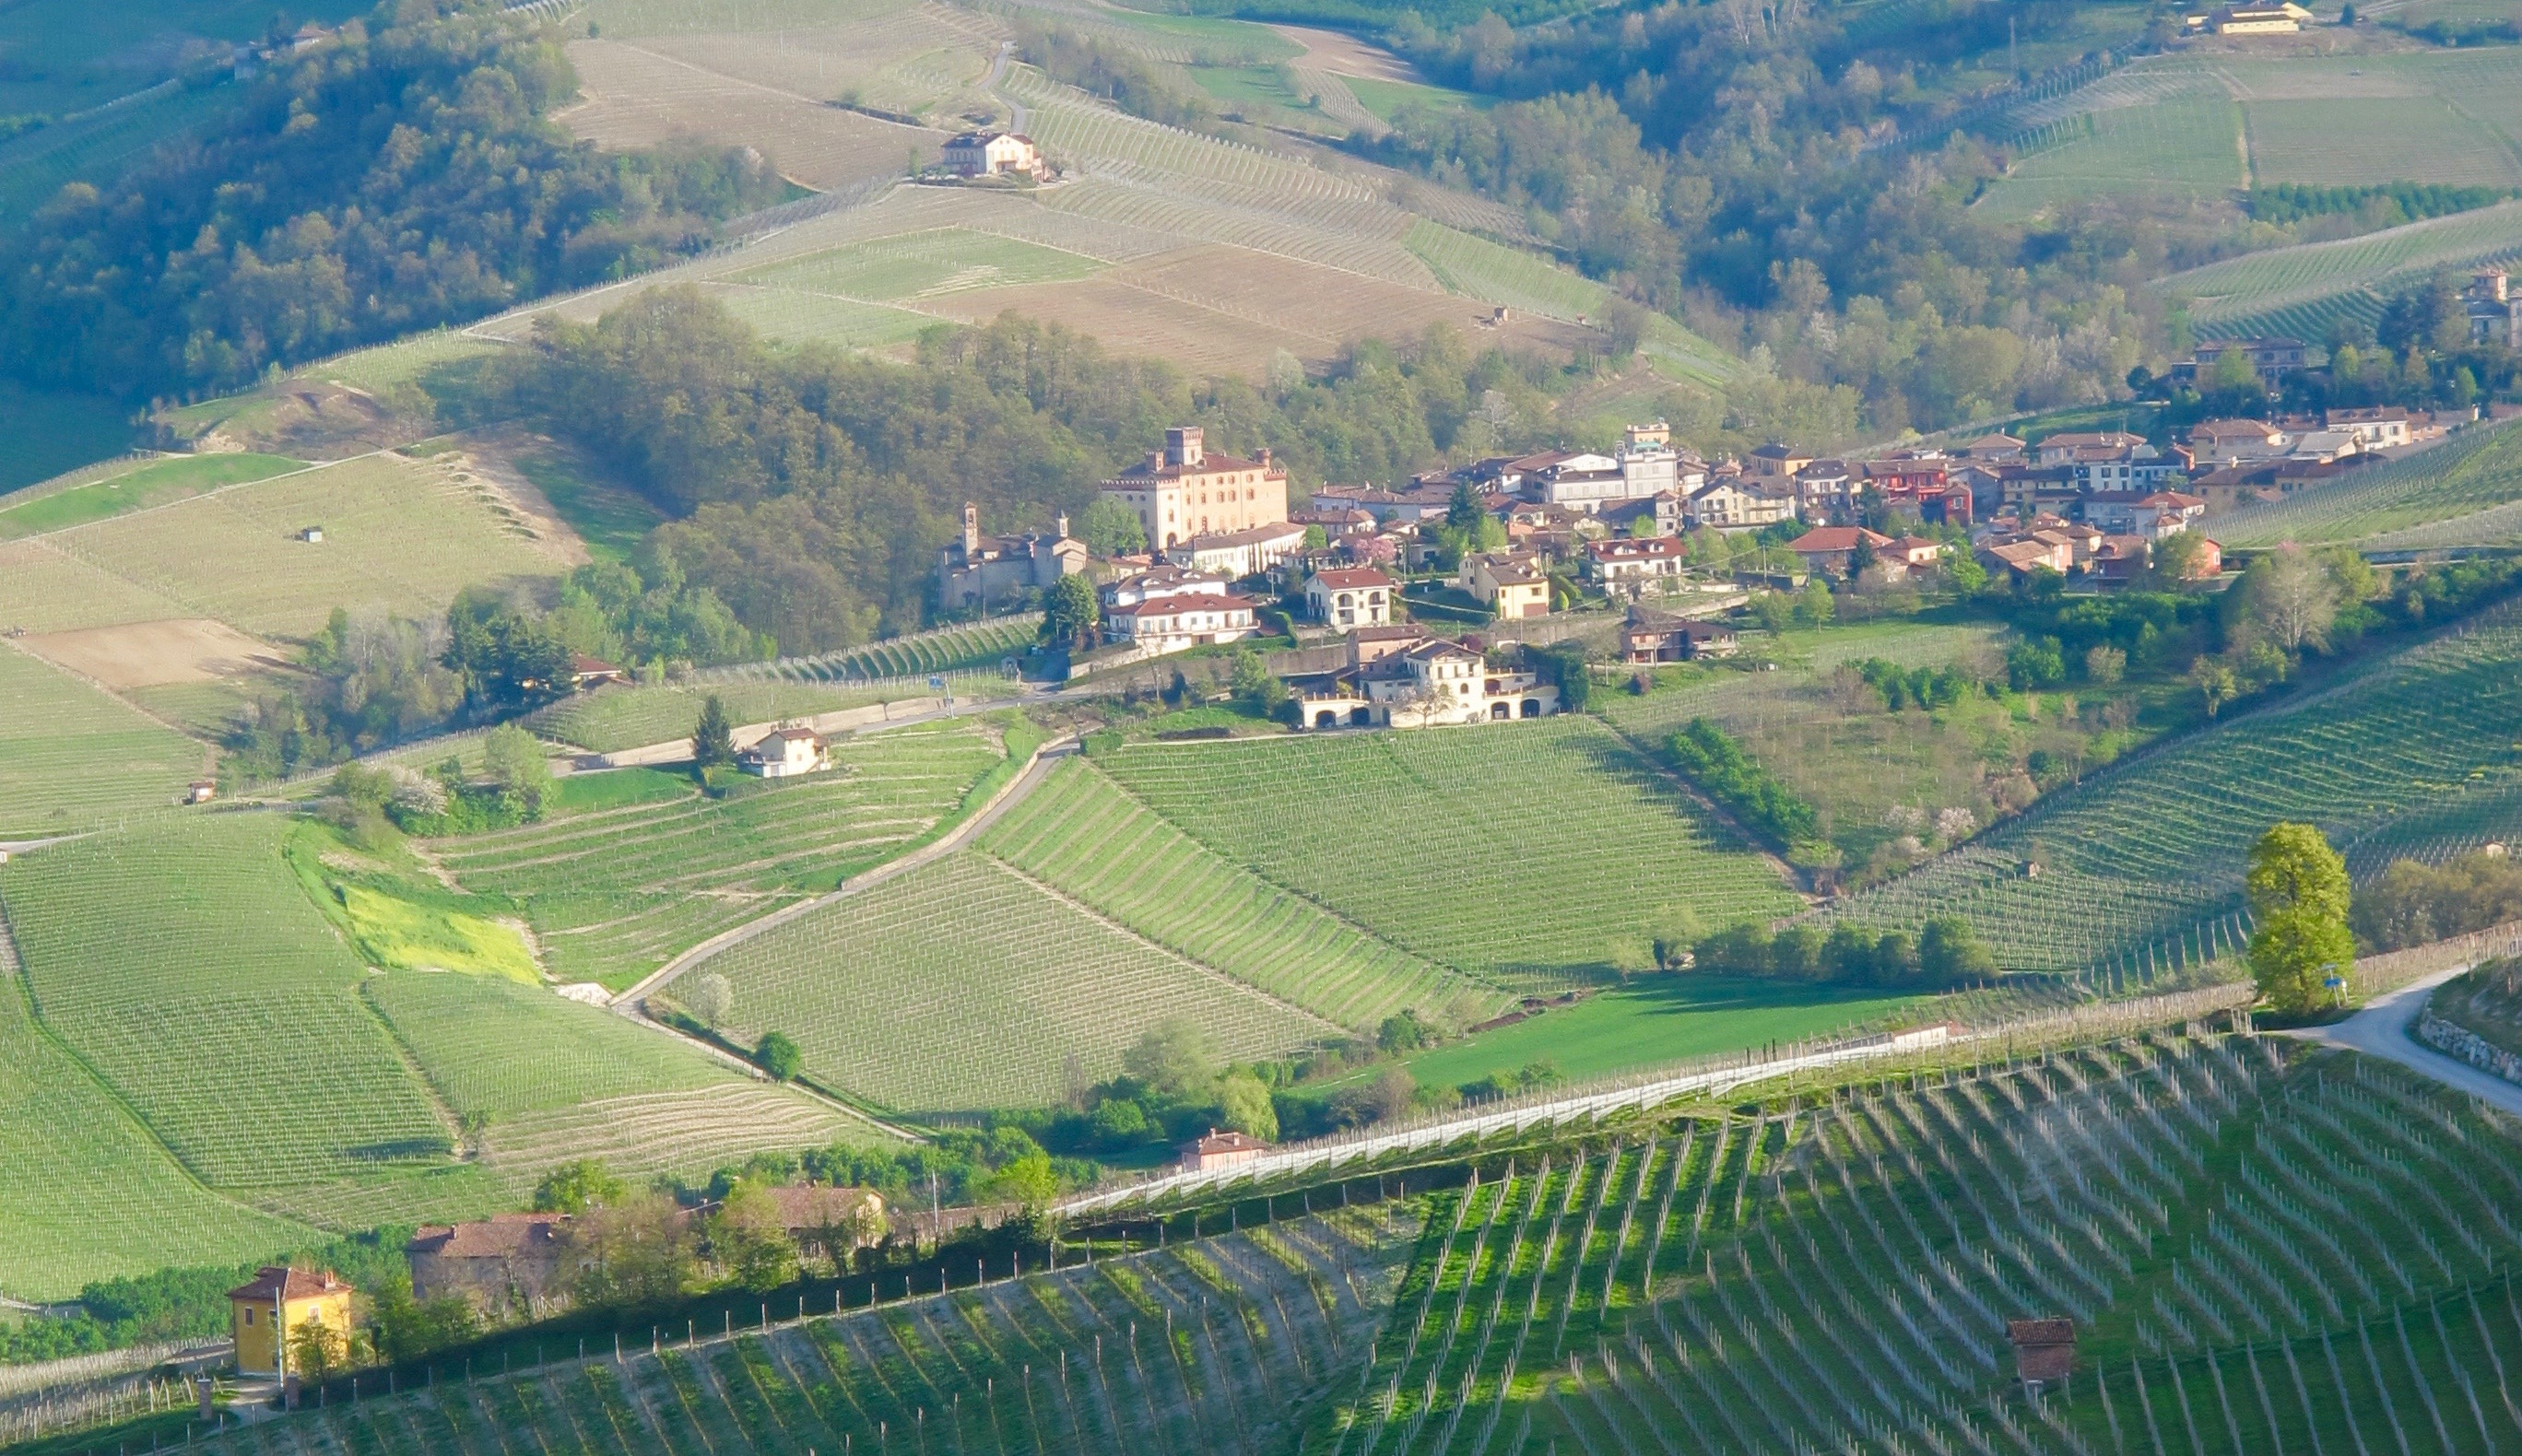 Nebbiolo vineyards on steep slopes surrounding the village of Barolo. 